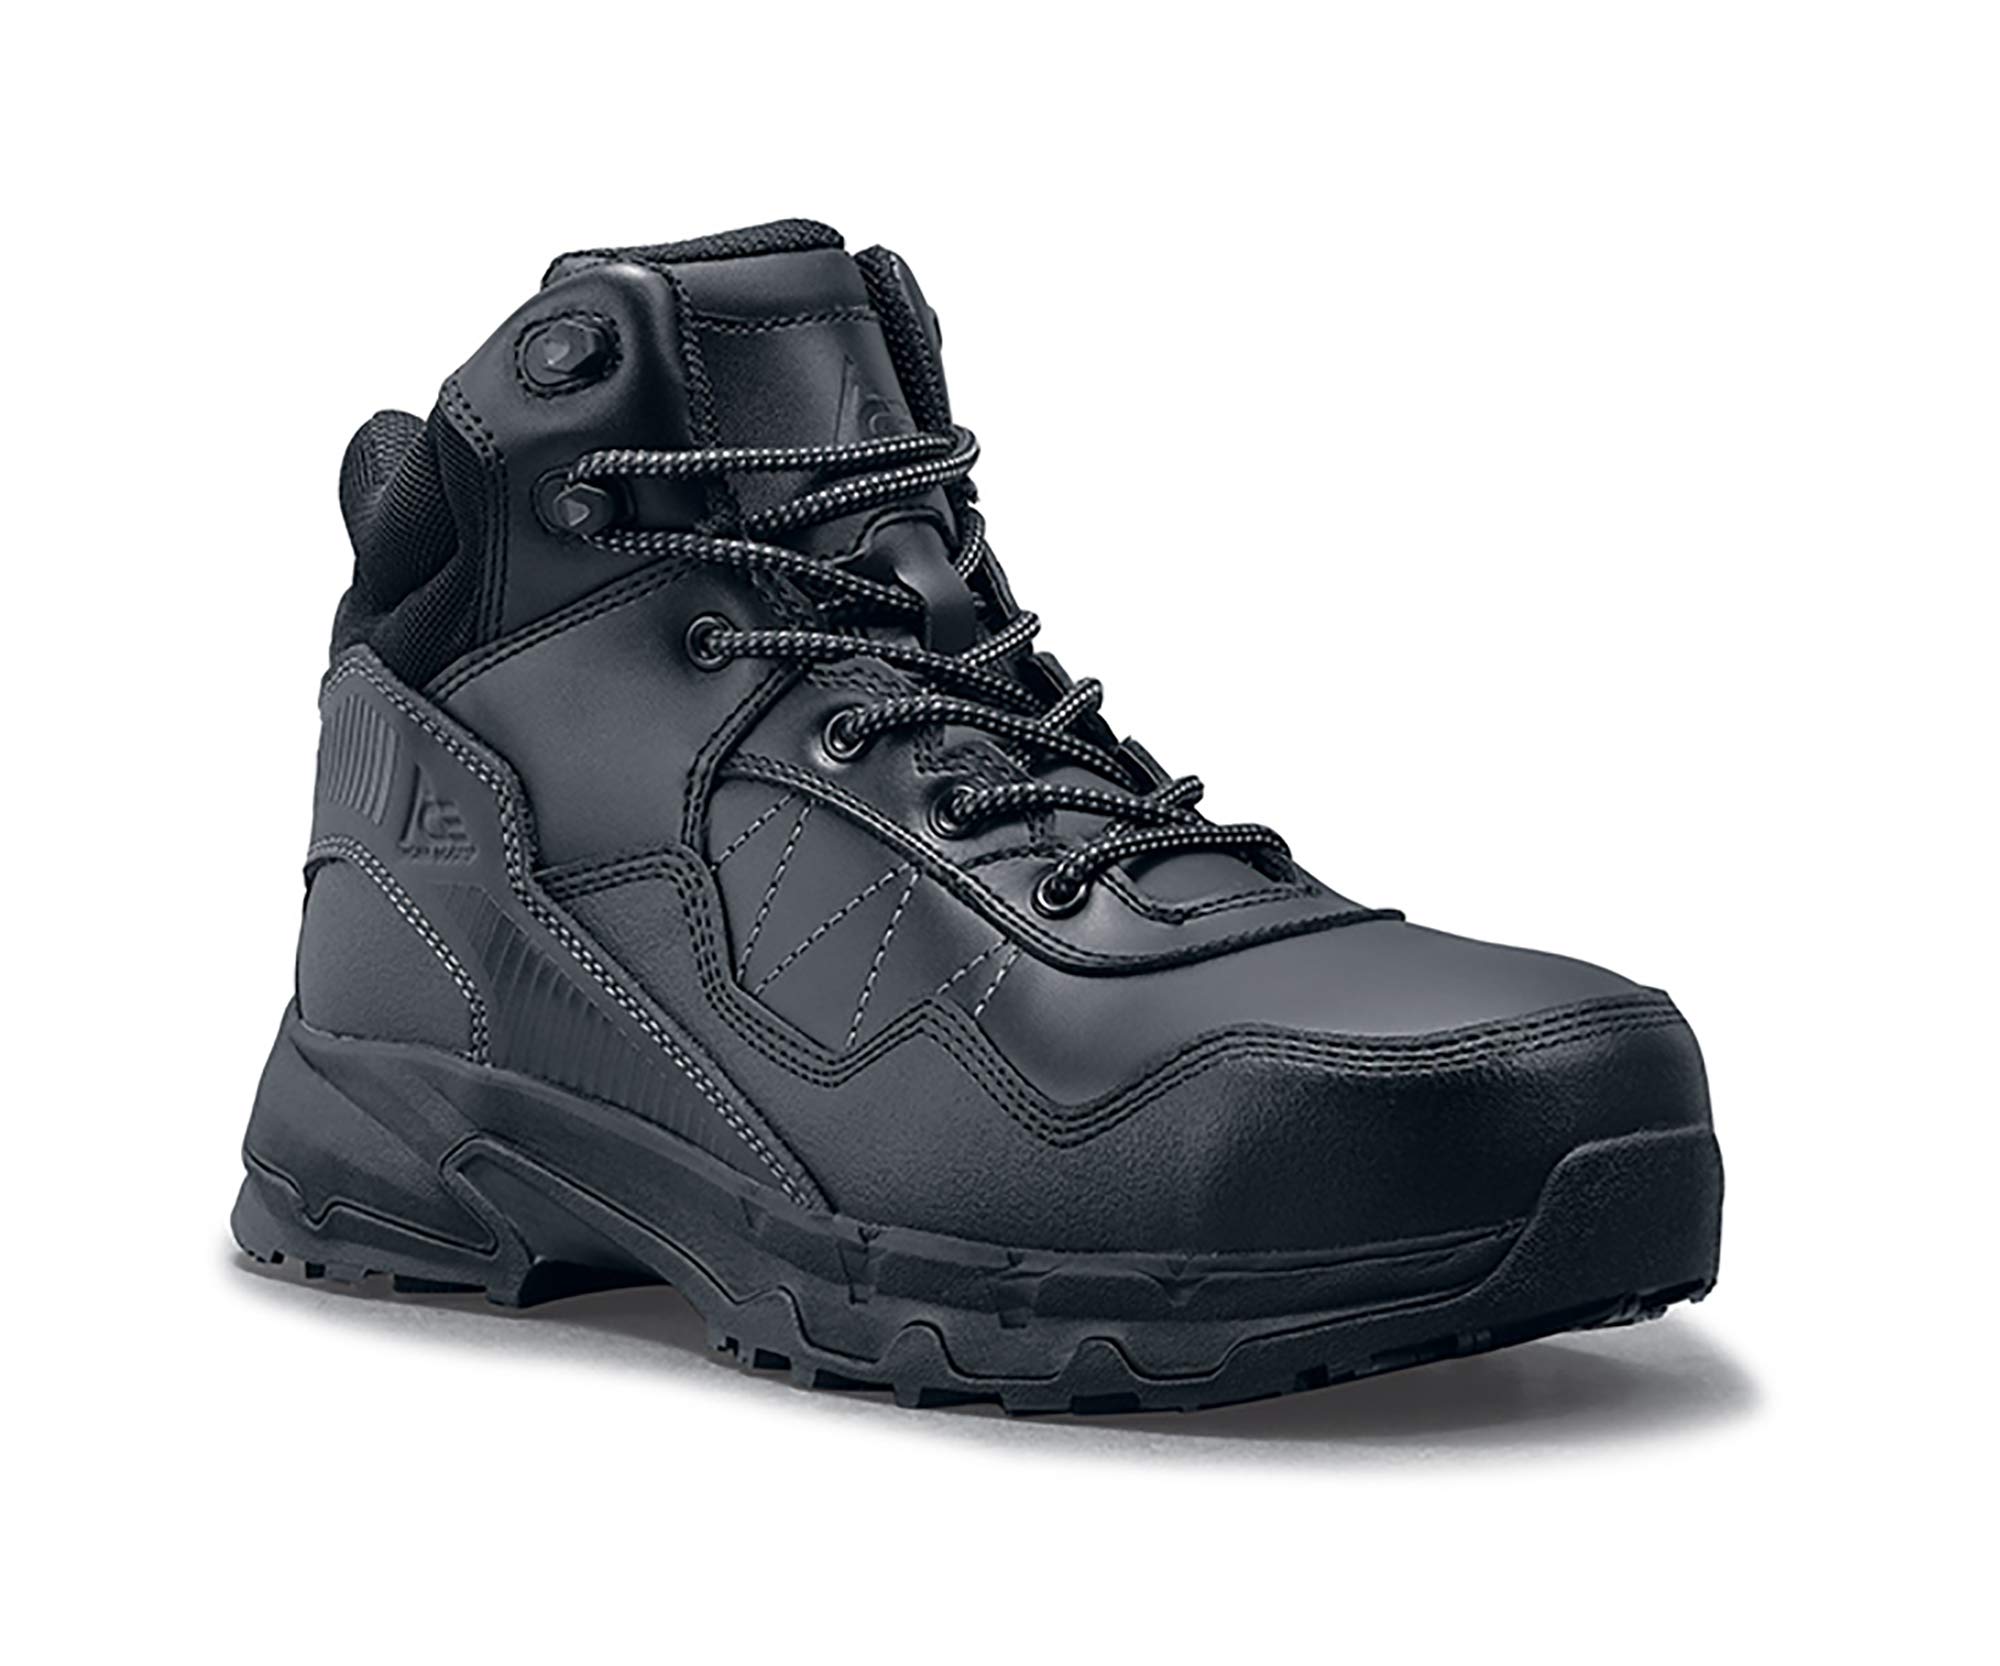 Shoes for Crews Piston Mid Aluminum Toe Unisex Work Shoe, Black